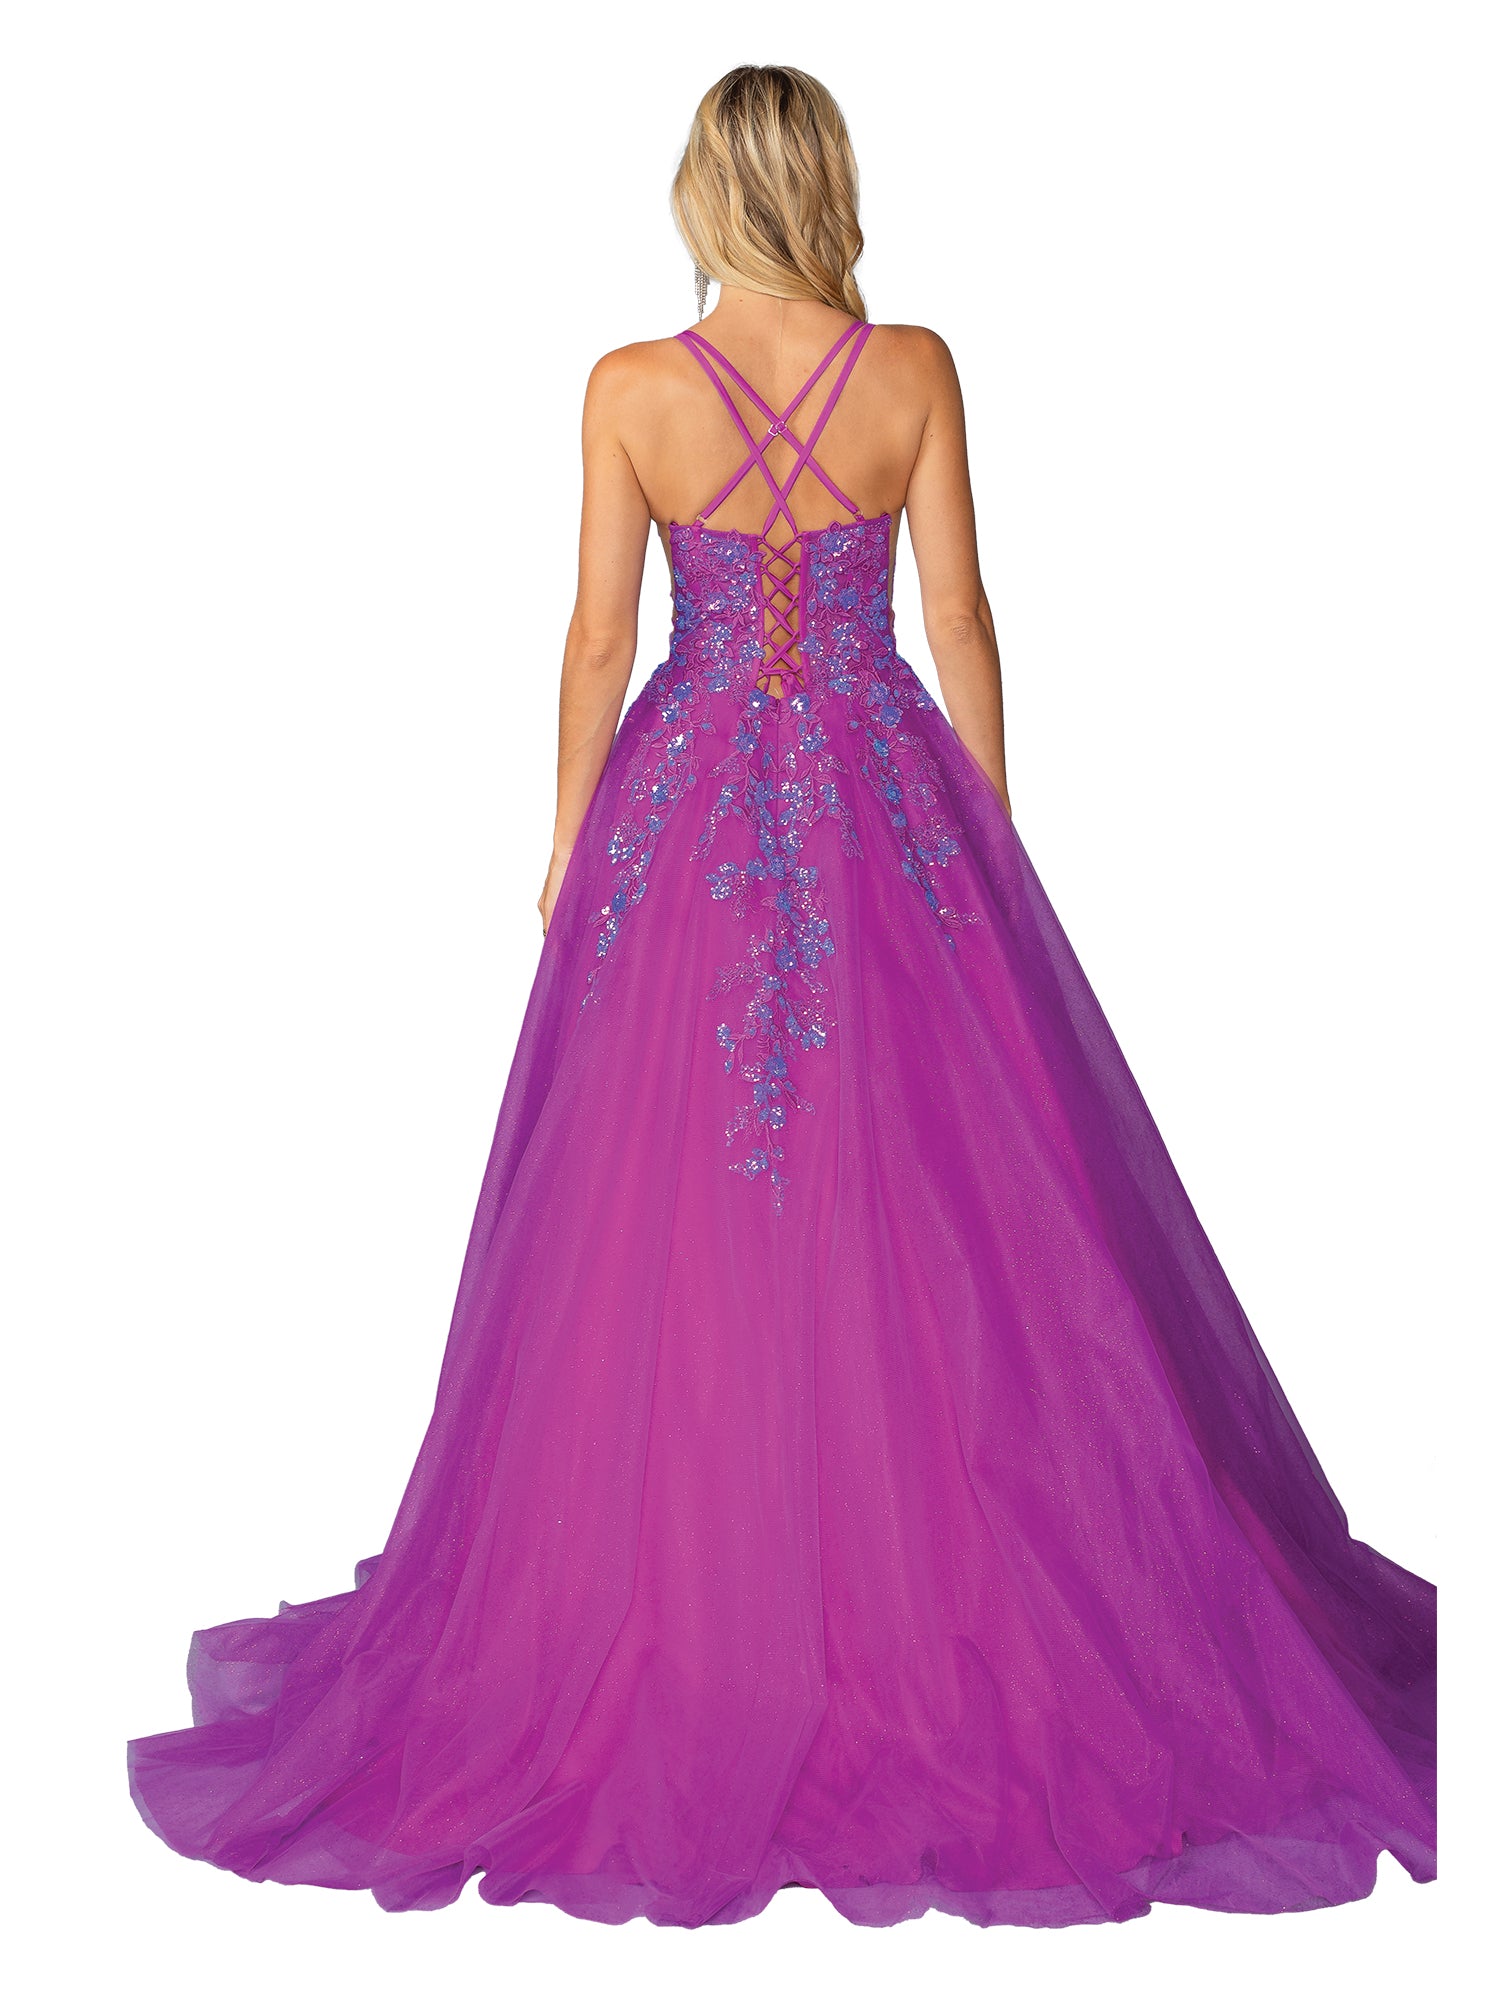 Long Prom Dress 4460 by Dancing Queen